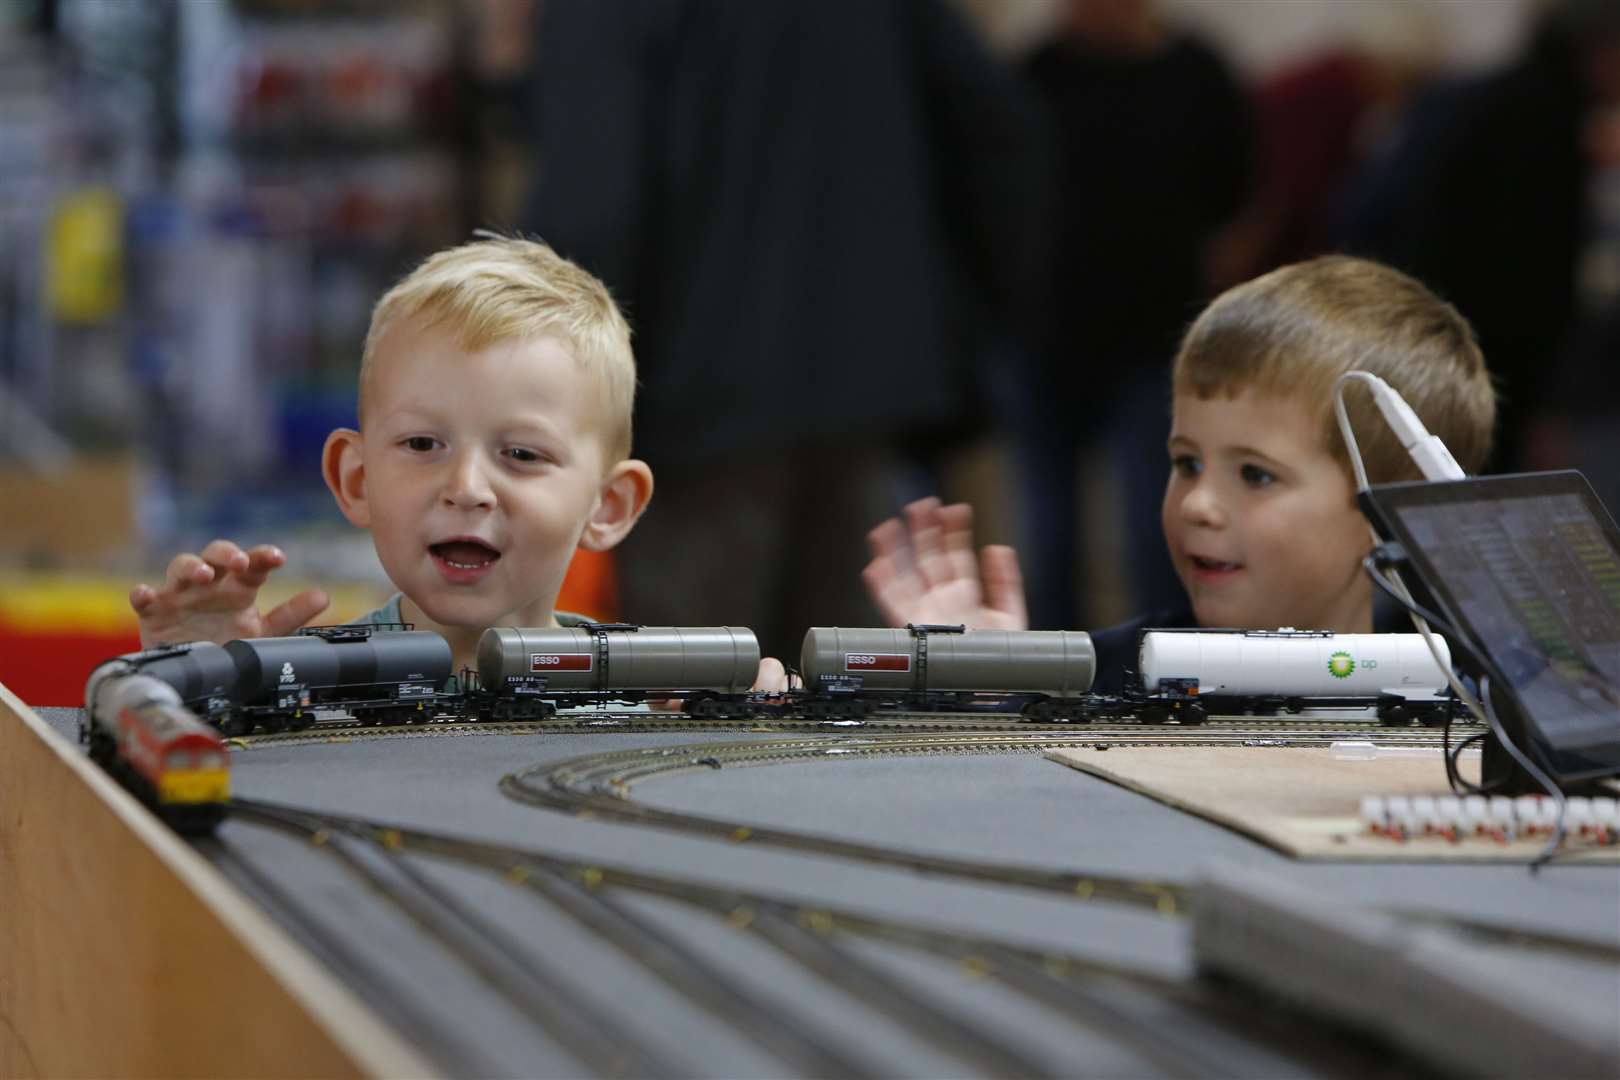 Children will enjoy the trains at Gravesend Model Railway Show